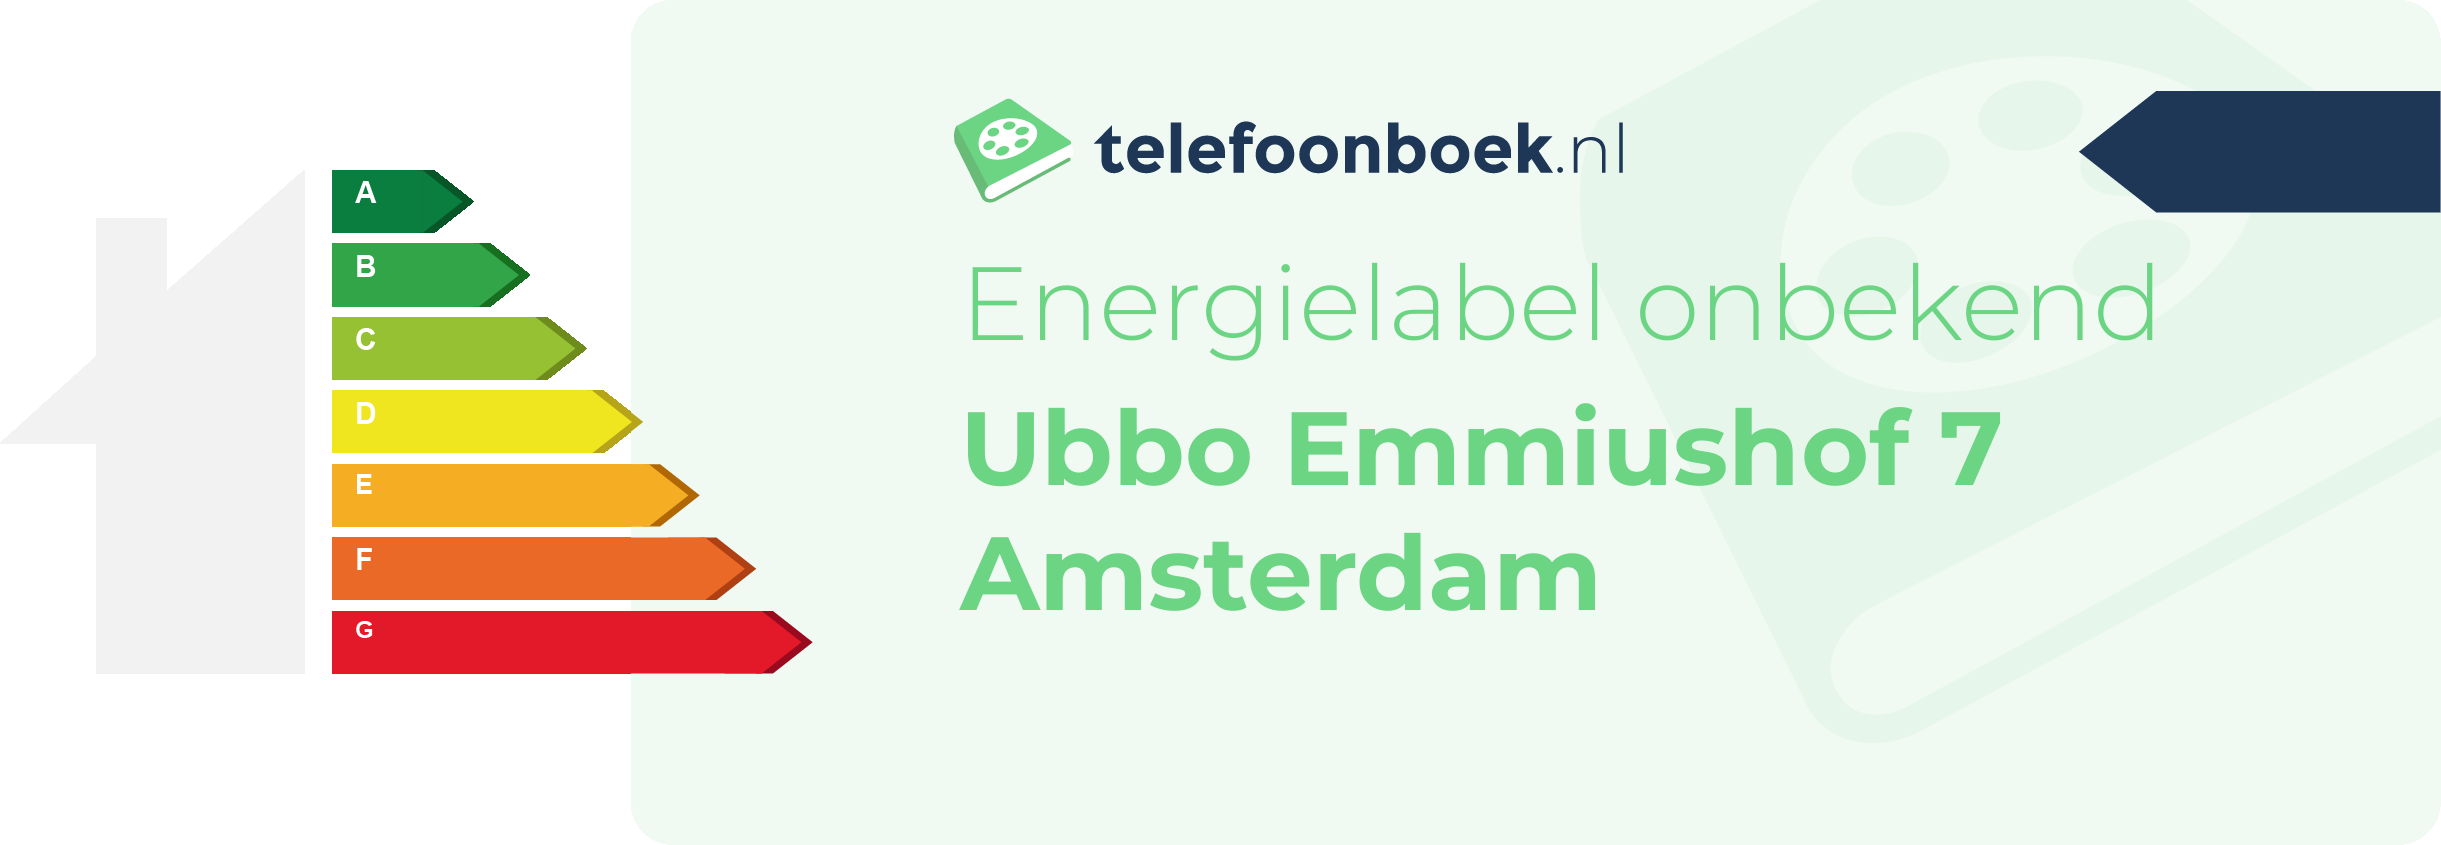 Energielabel Ubbo Emmiushof 7 Amsterdam